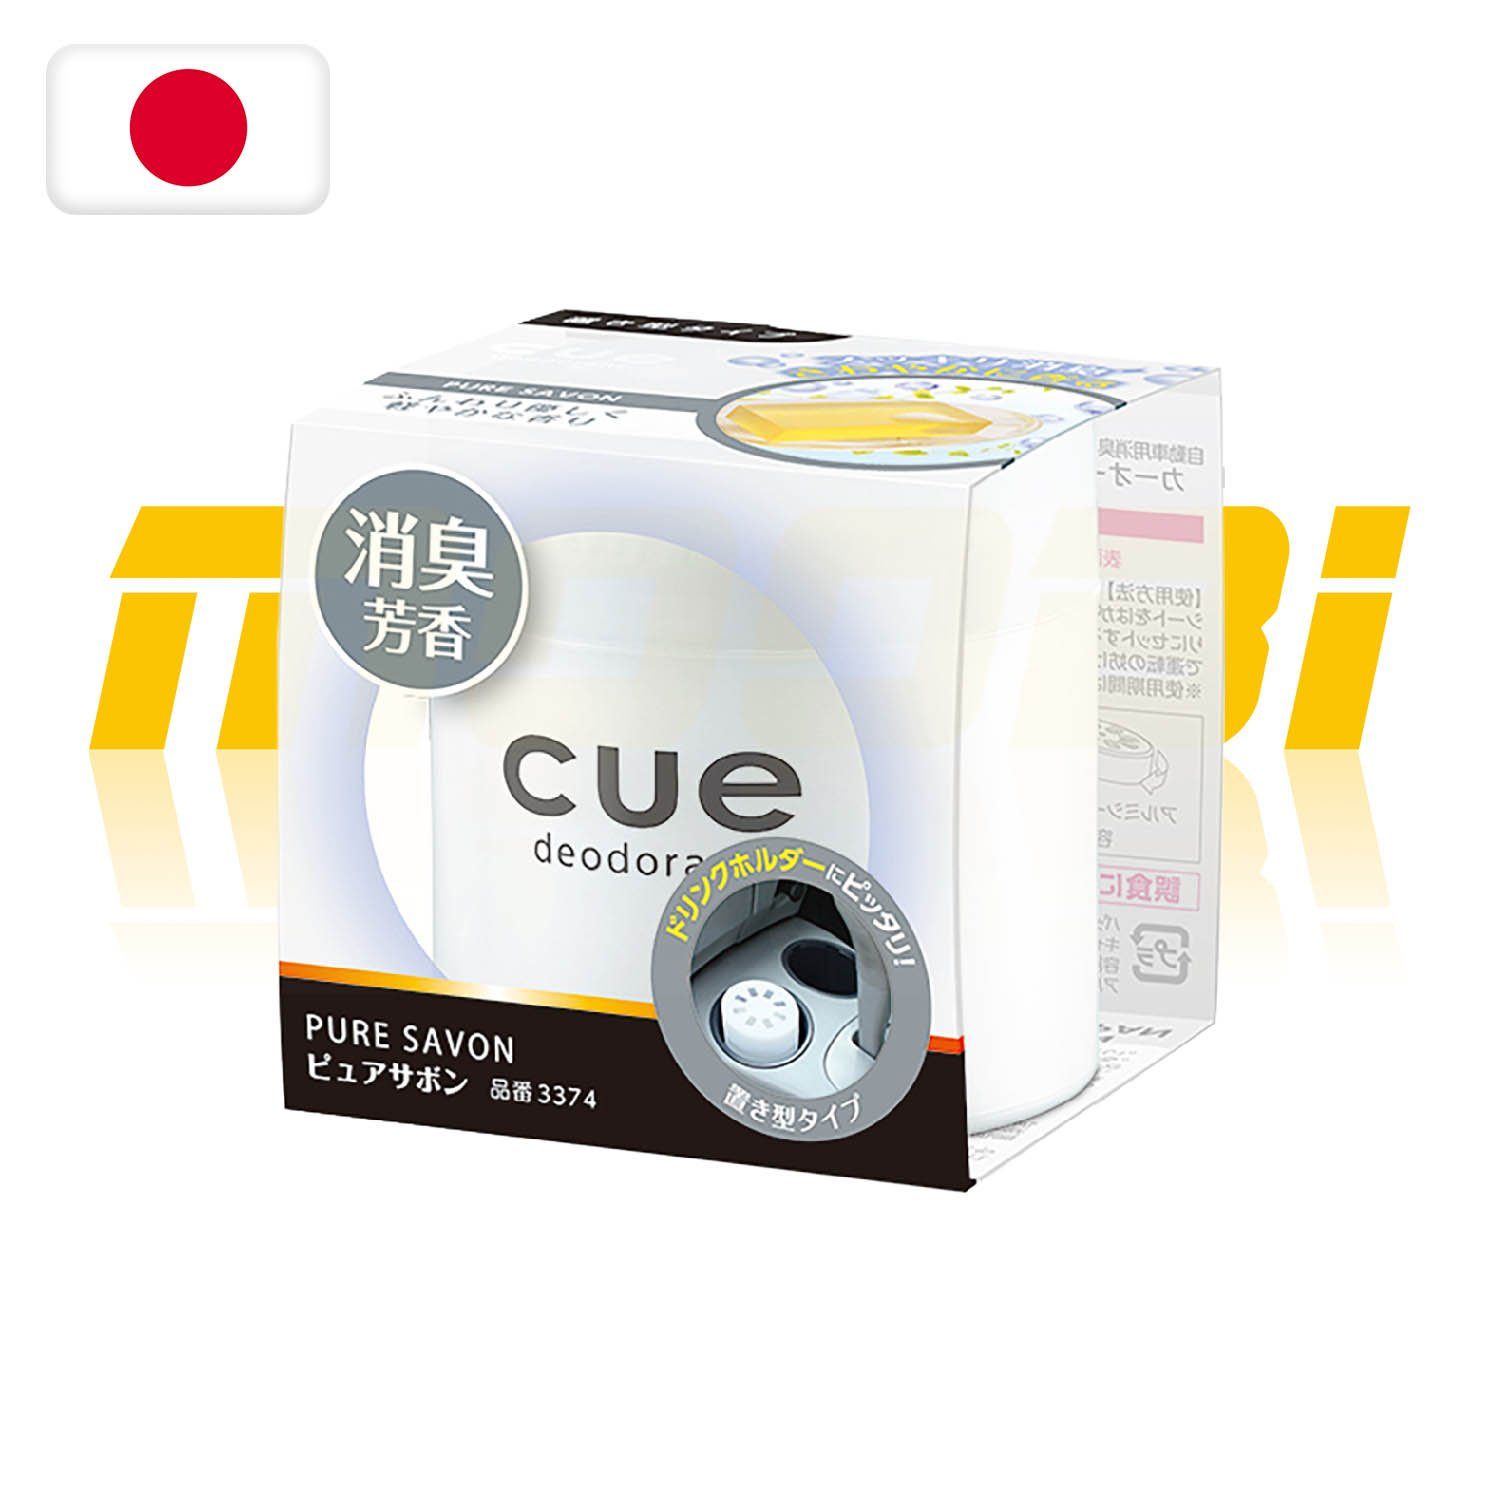 CARALL | Cue 擺設型香膏 | 日本製 | MOOBI 香港網上汽車用品專門店 p1